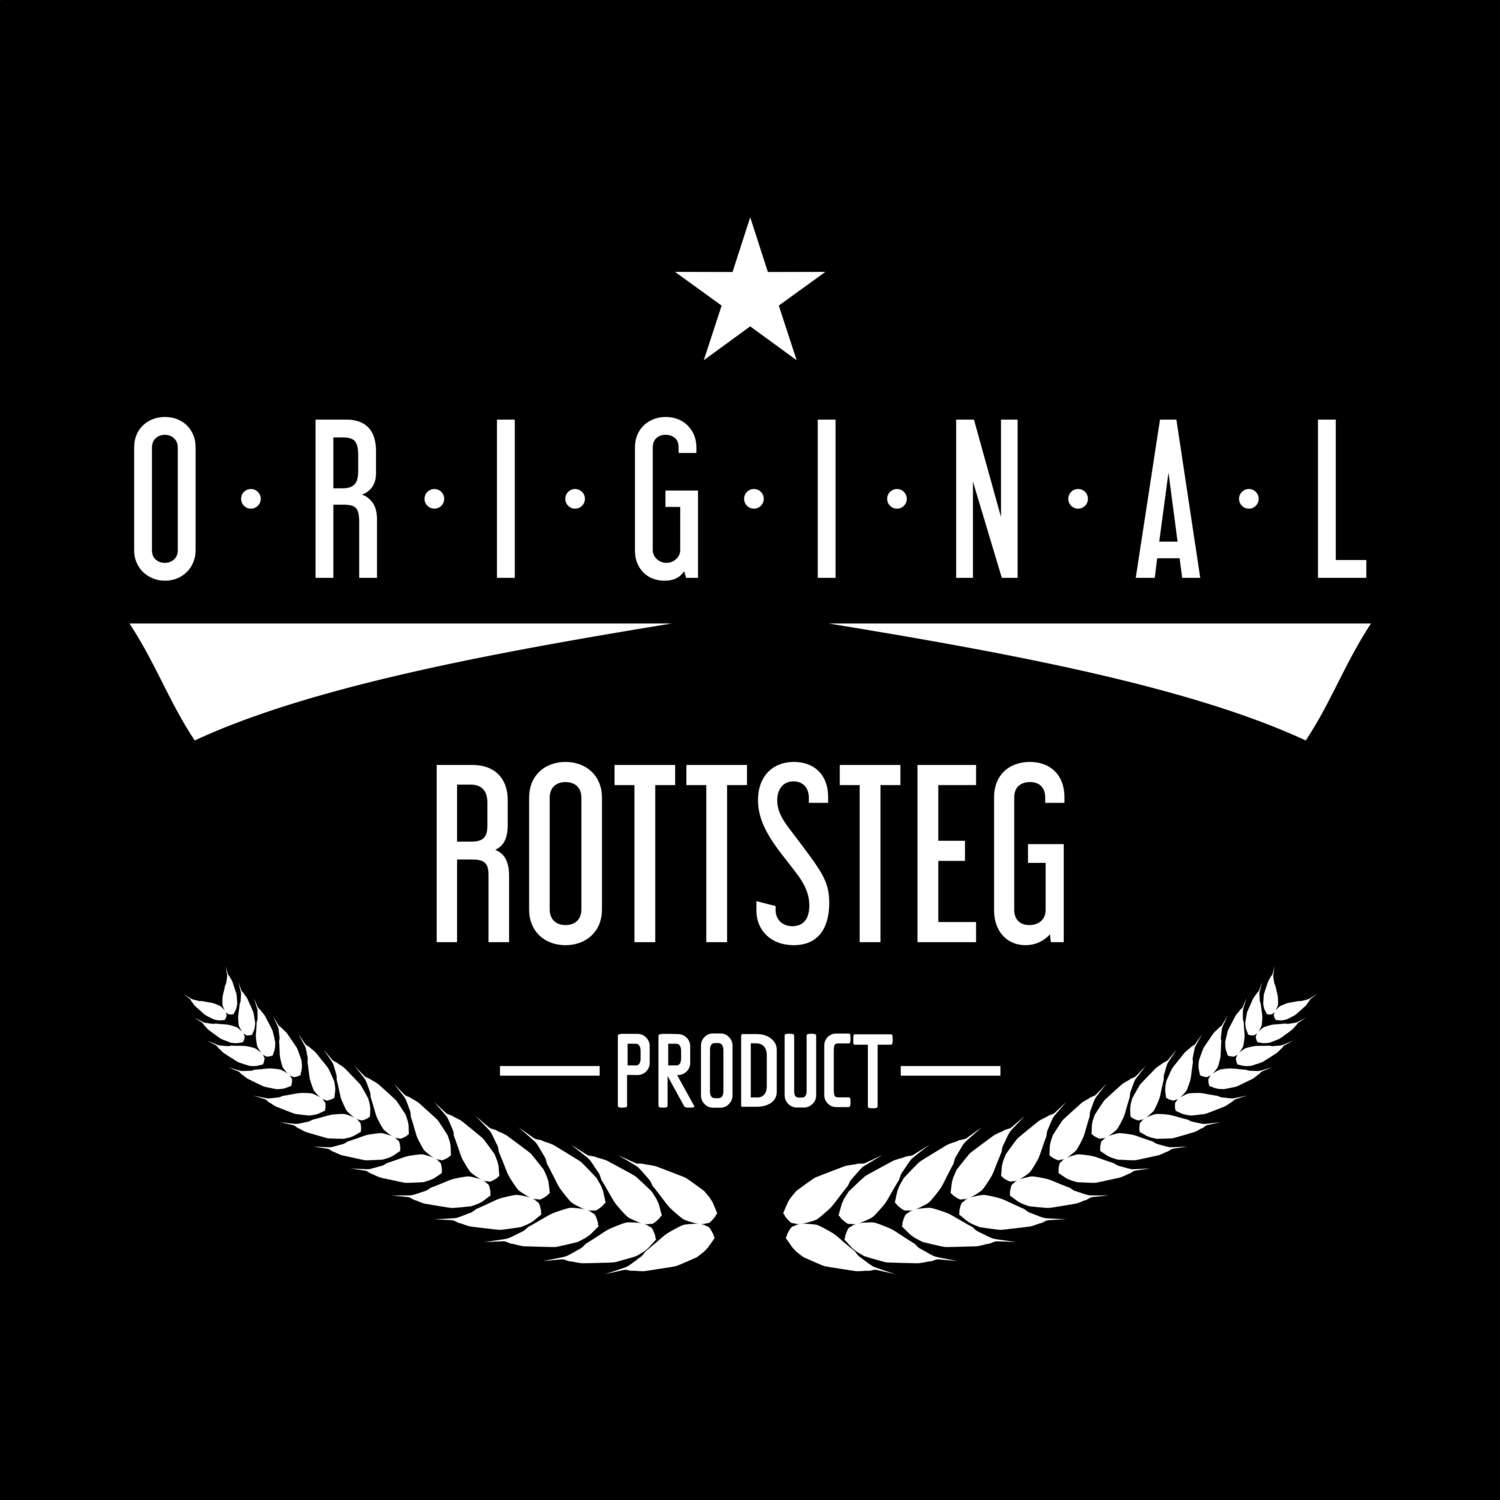 Rottsteg T-Shirt »Original Product«